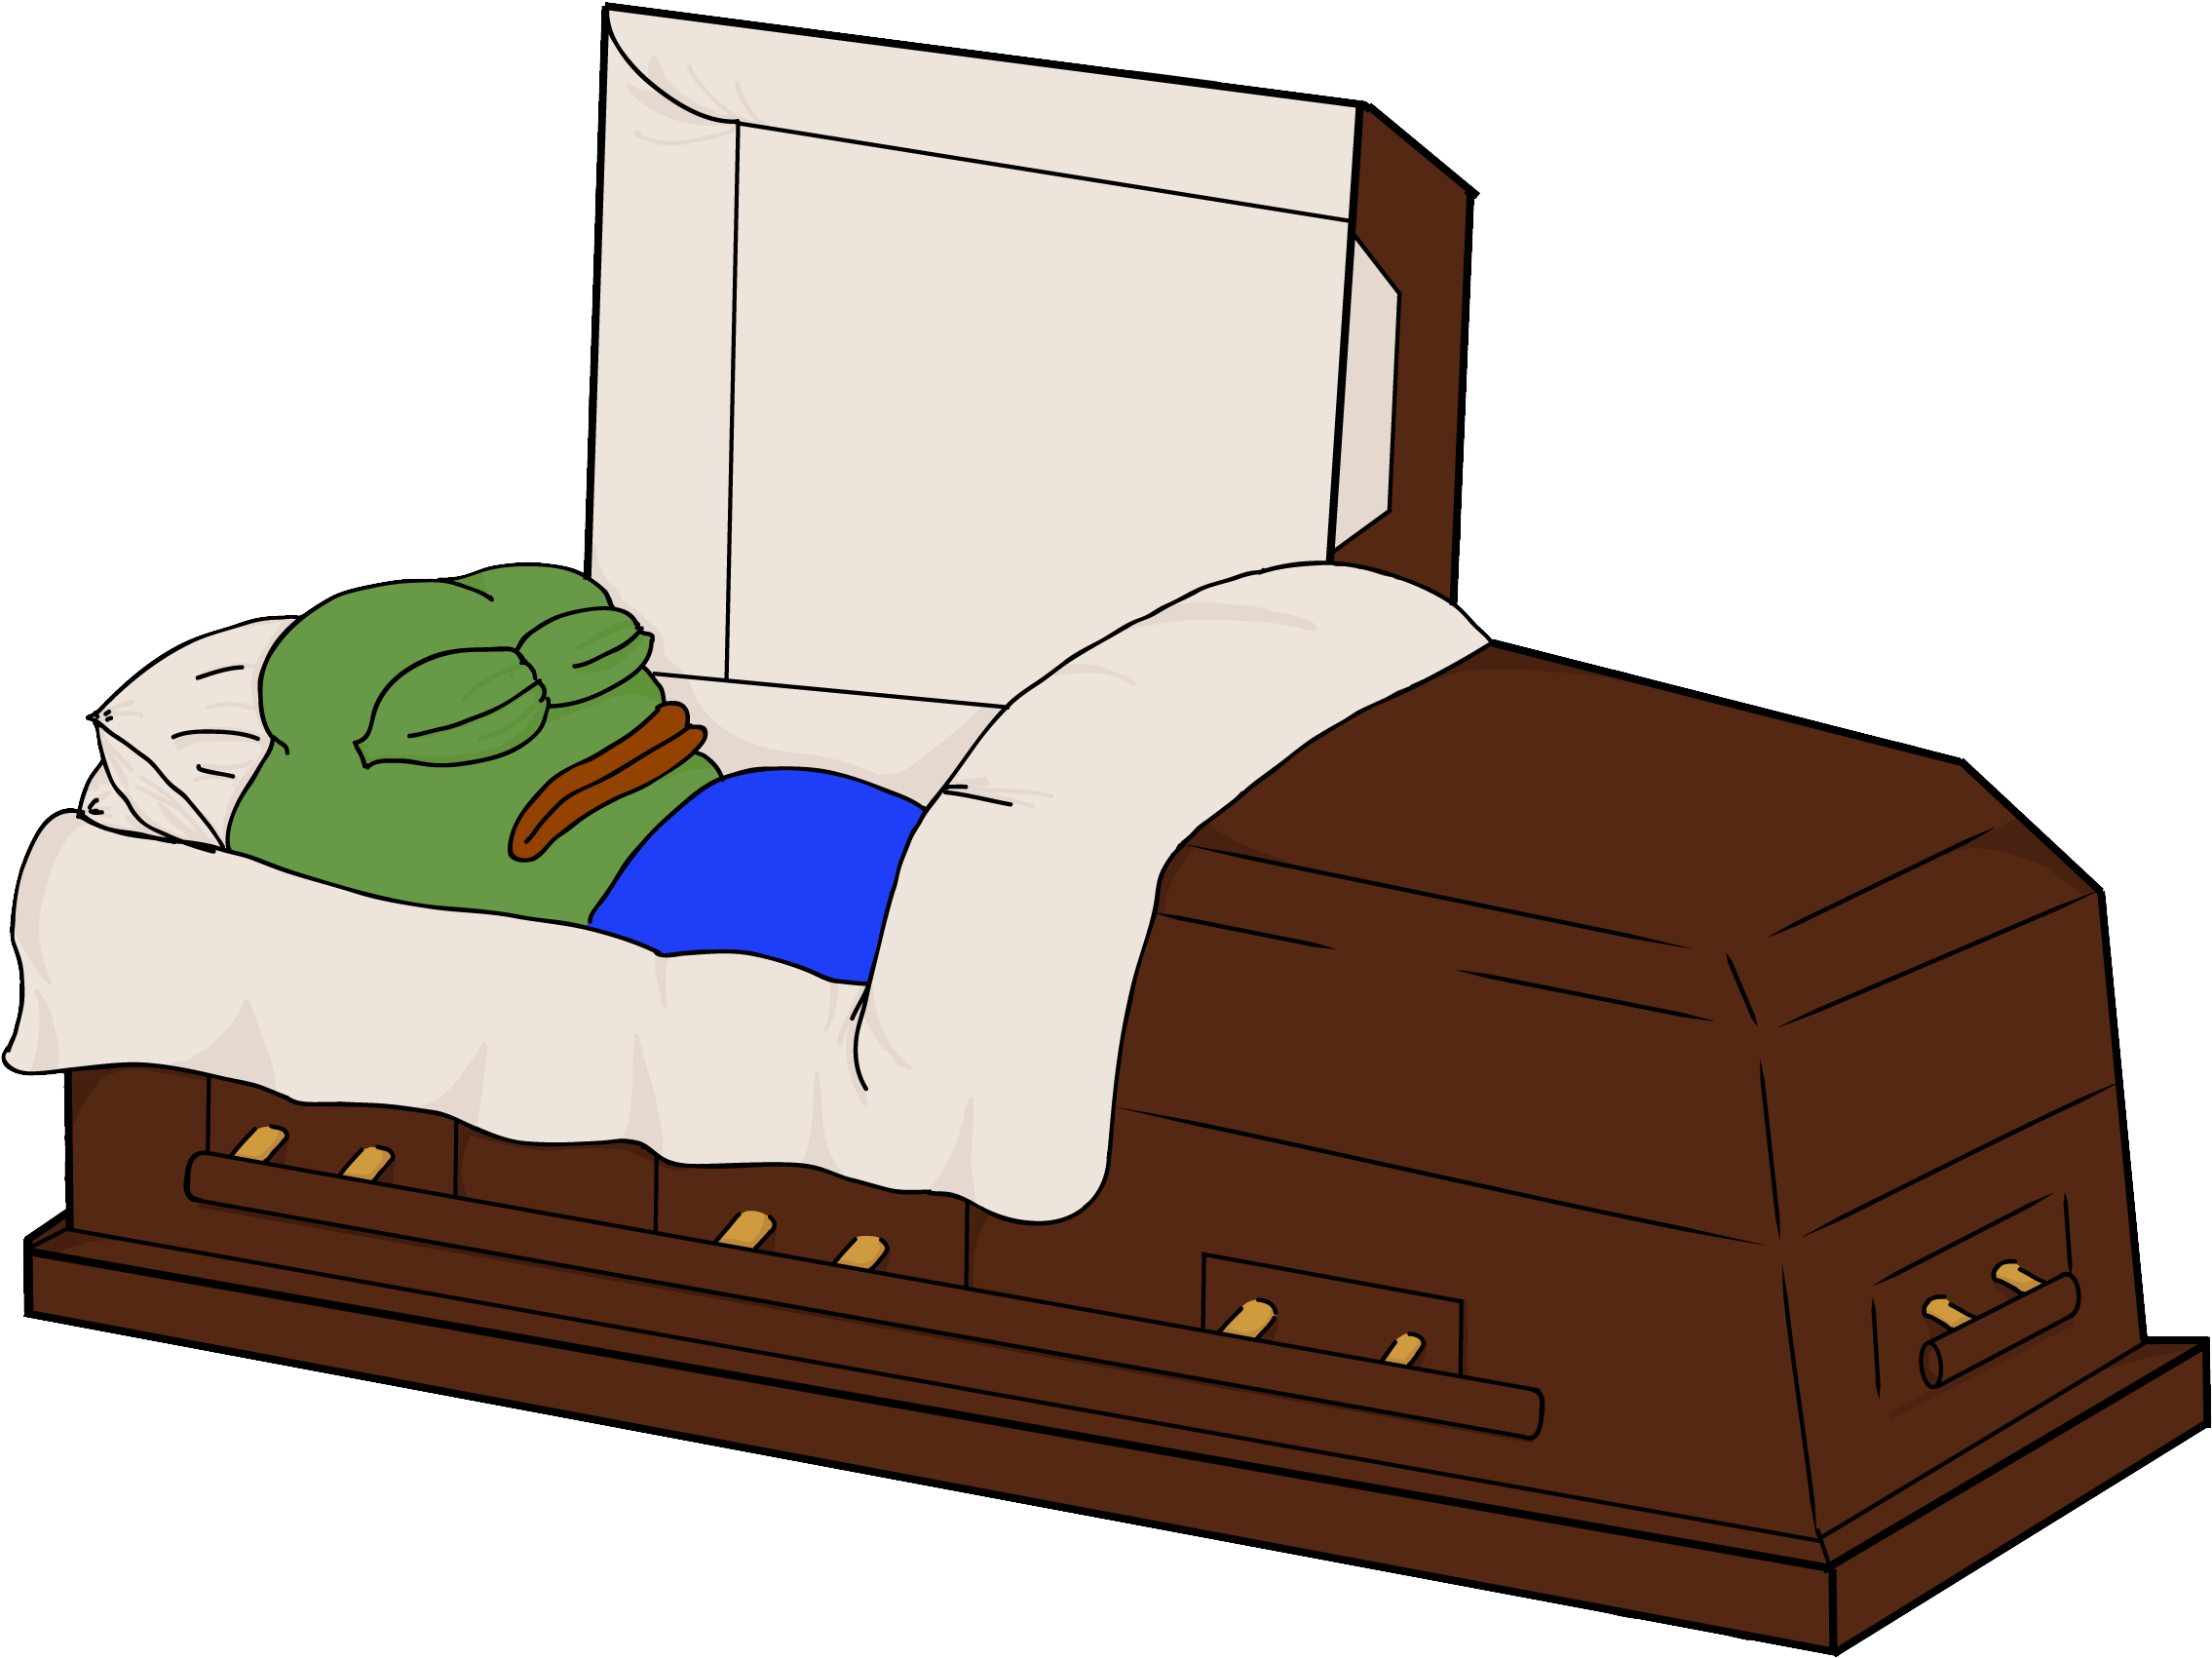 Cartoon A Cartoon Of A Frog In A Coffin